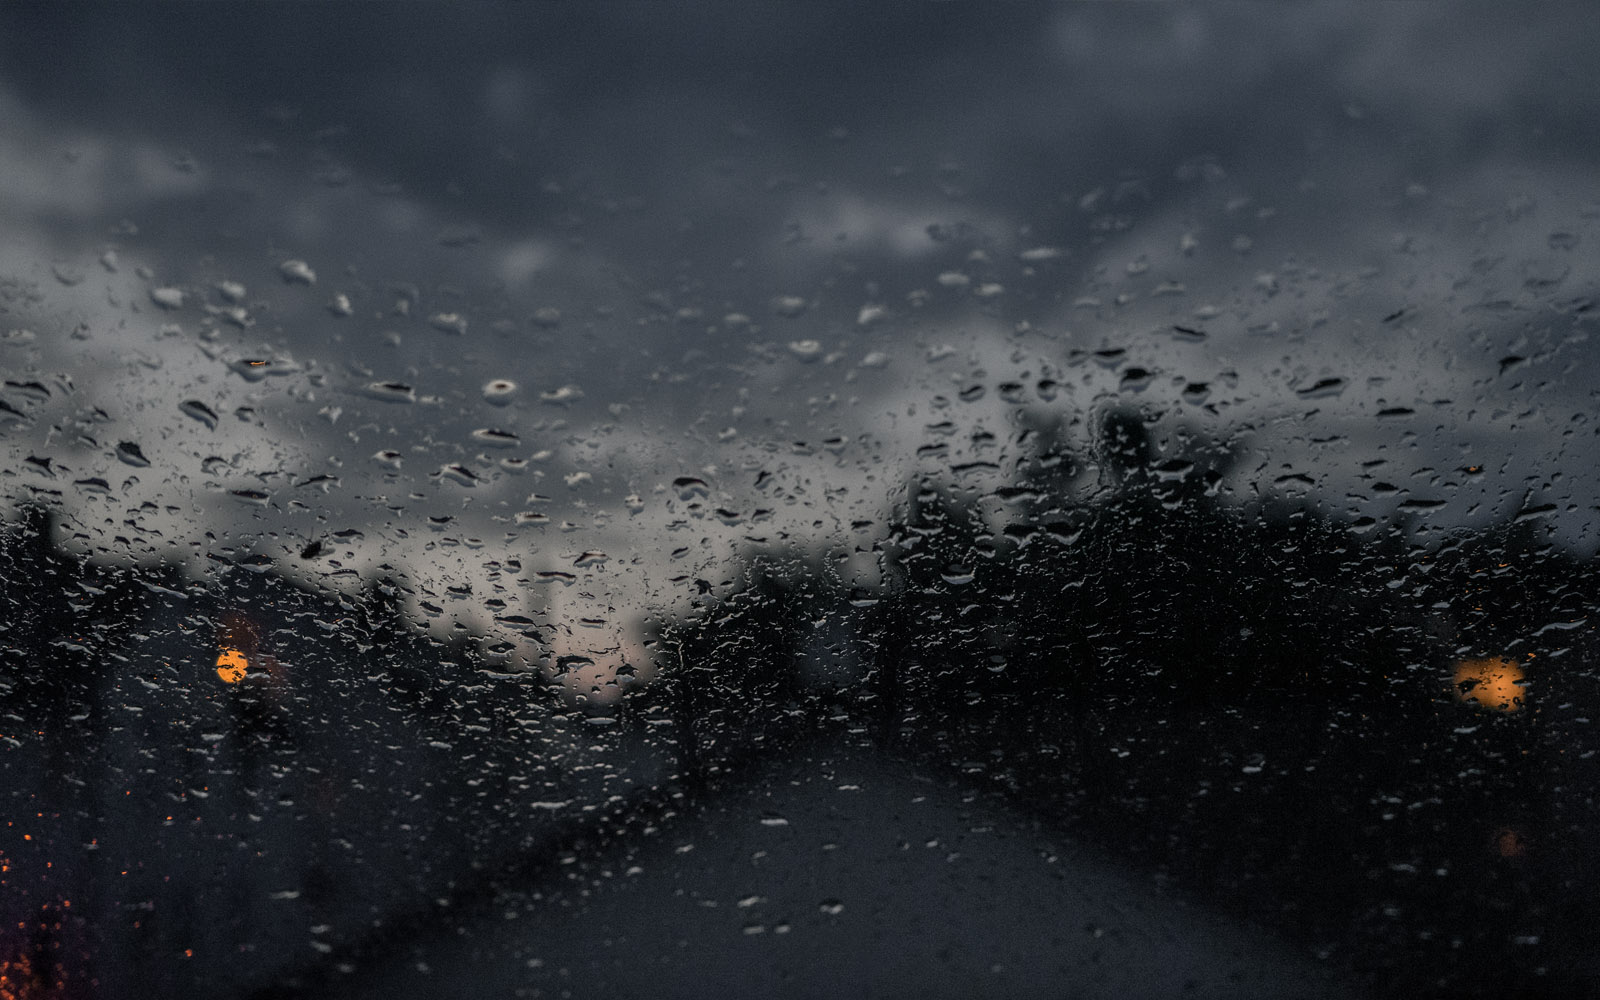 Kamera vor Regen schützen: Fotografieren trotz Regen